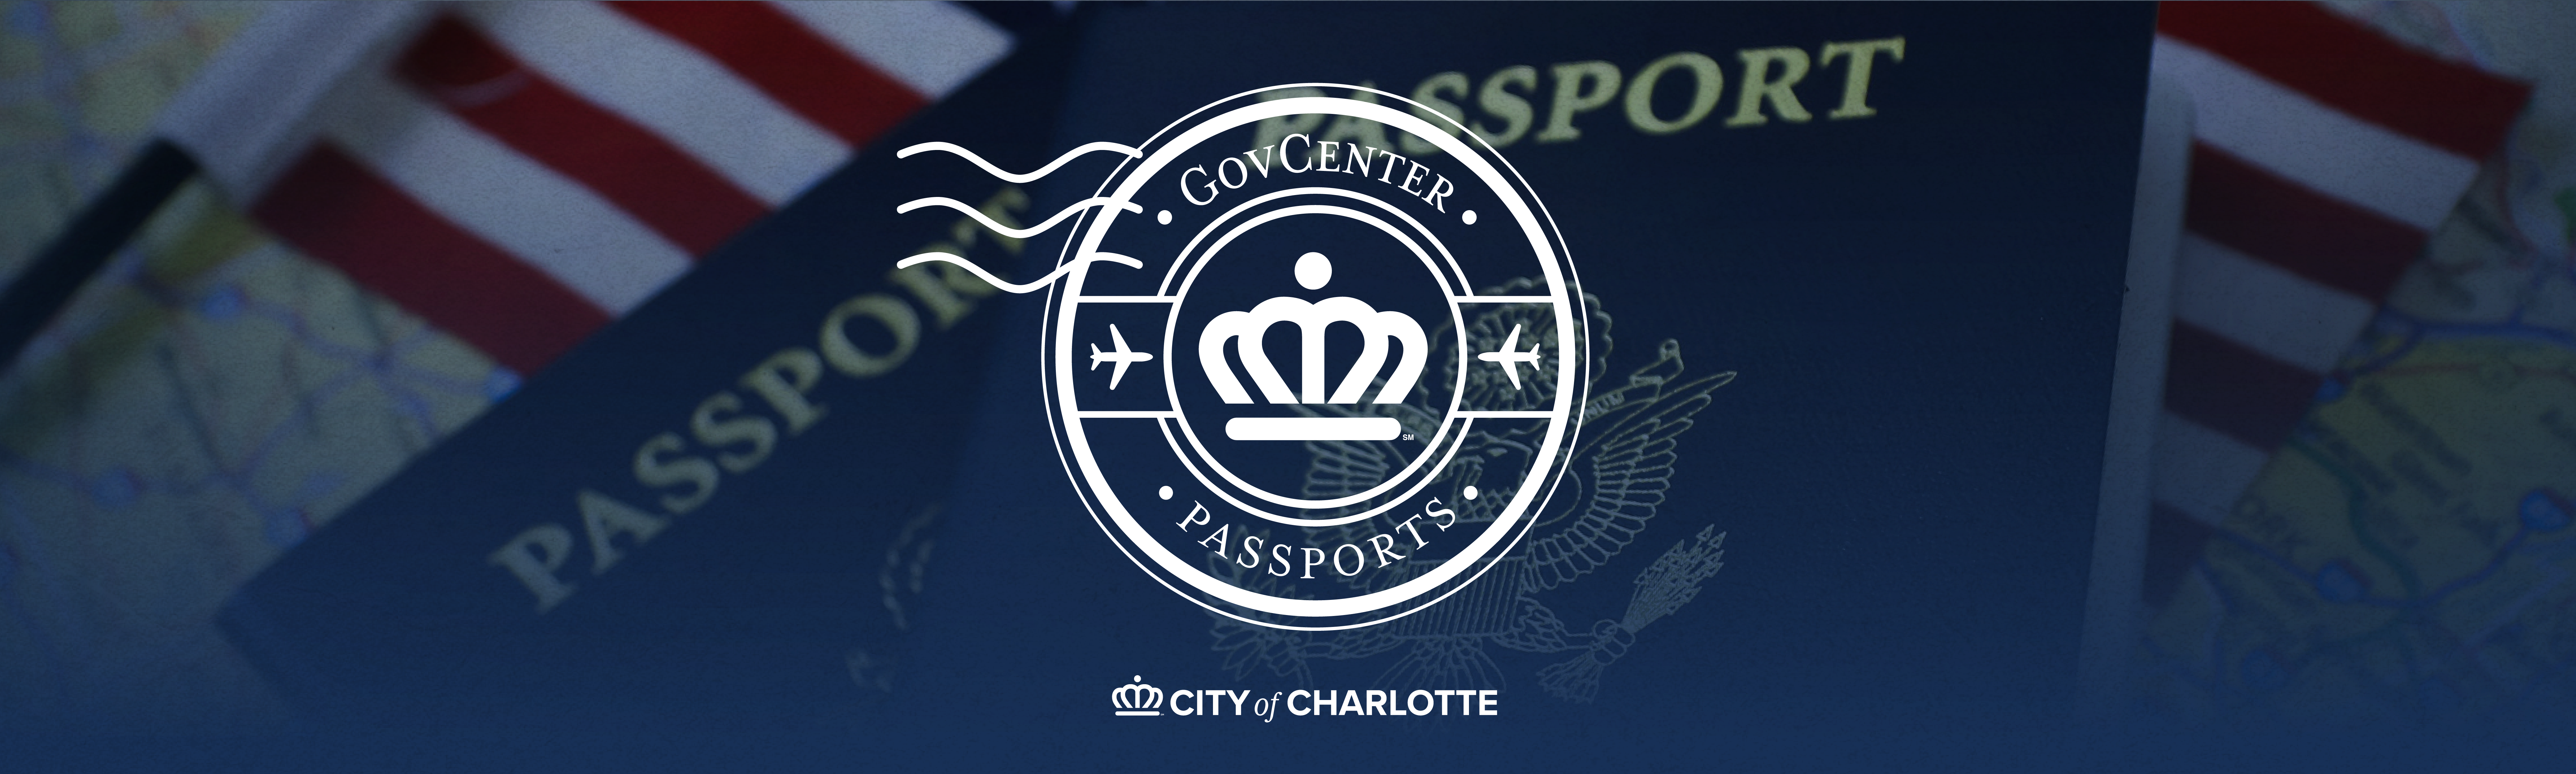 City of Charlotte Passport logo